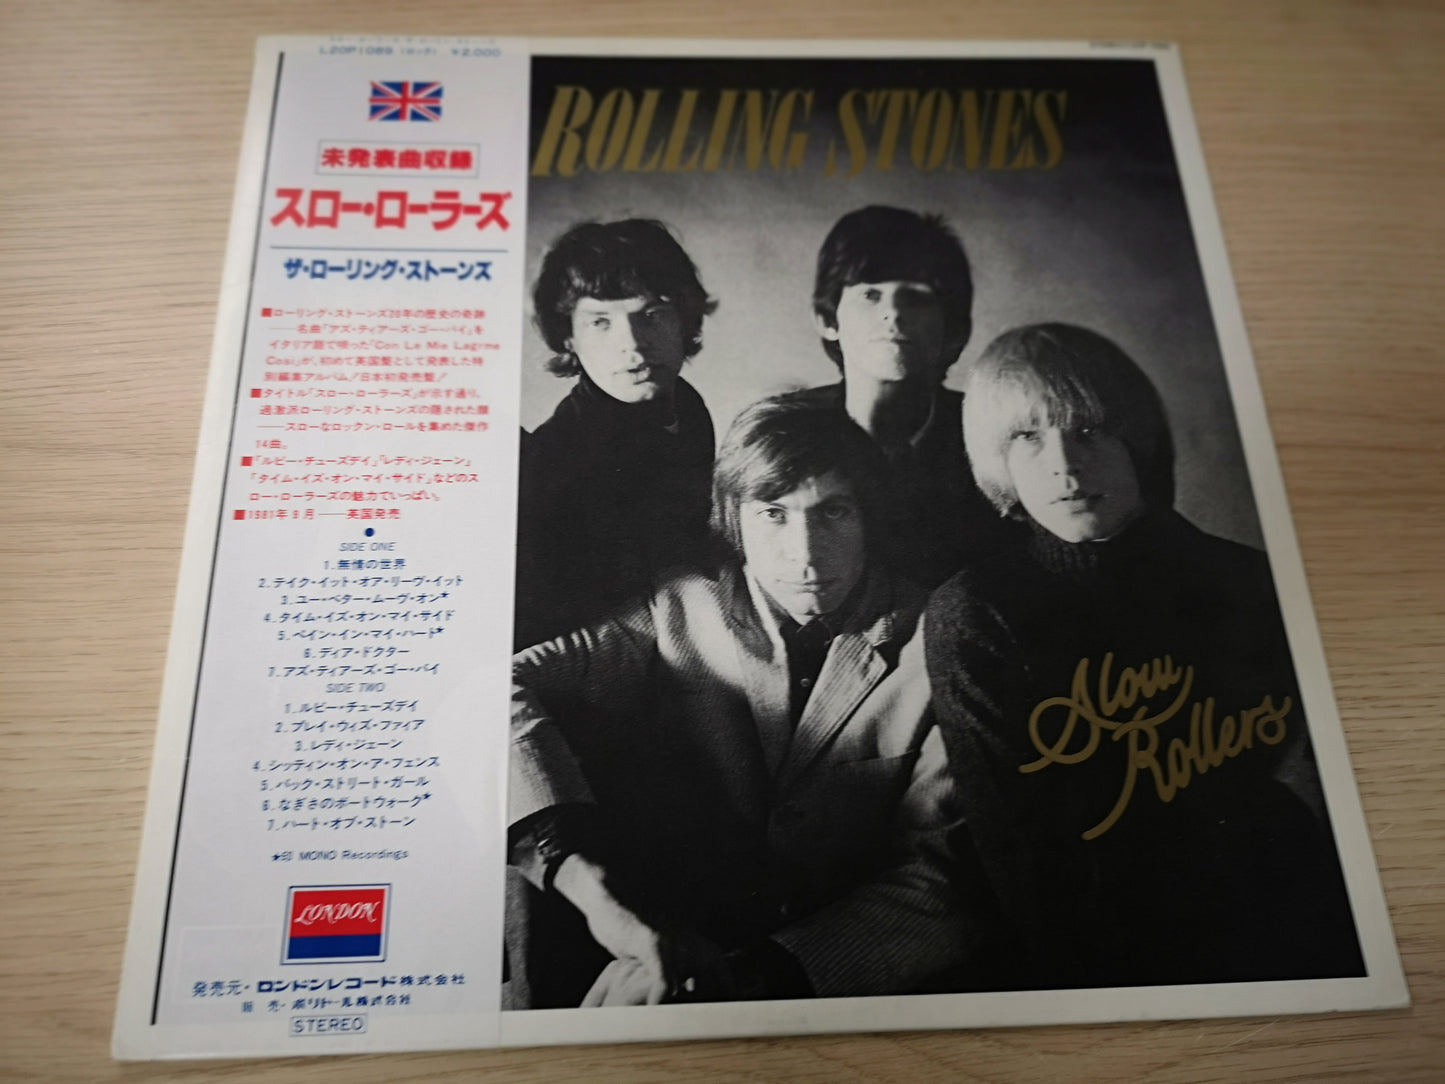 Rolling Stones "Slow Rollers" Orig Japan 1982 M-/M- ('60s Tracks)